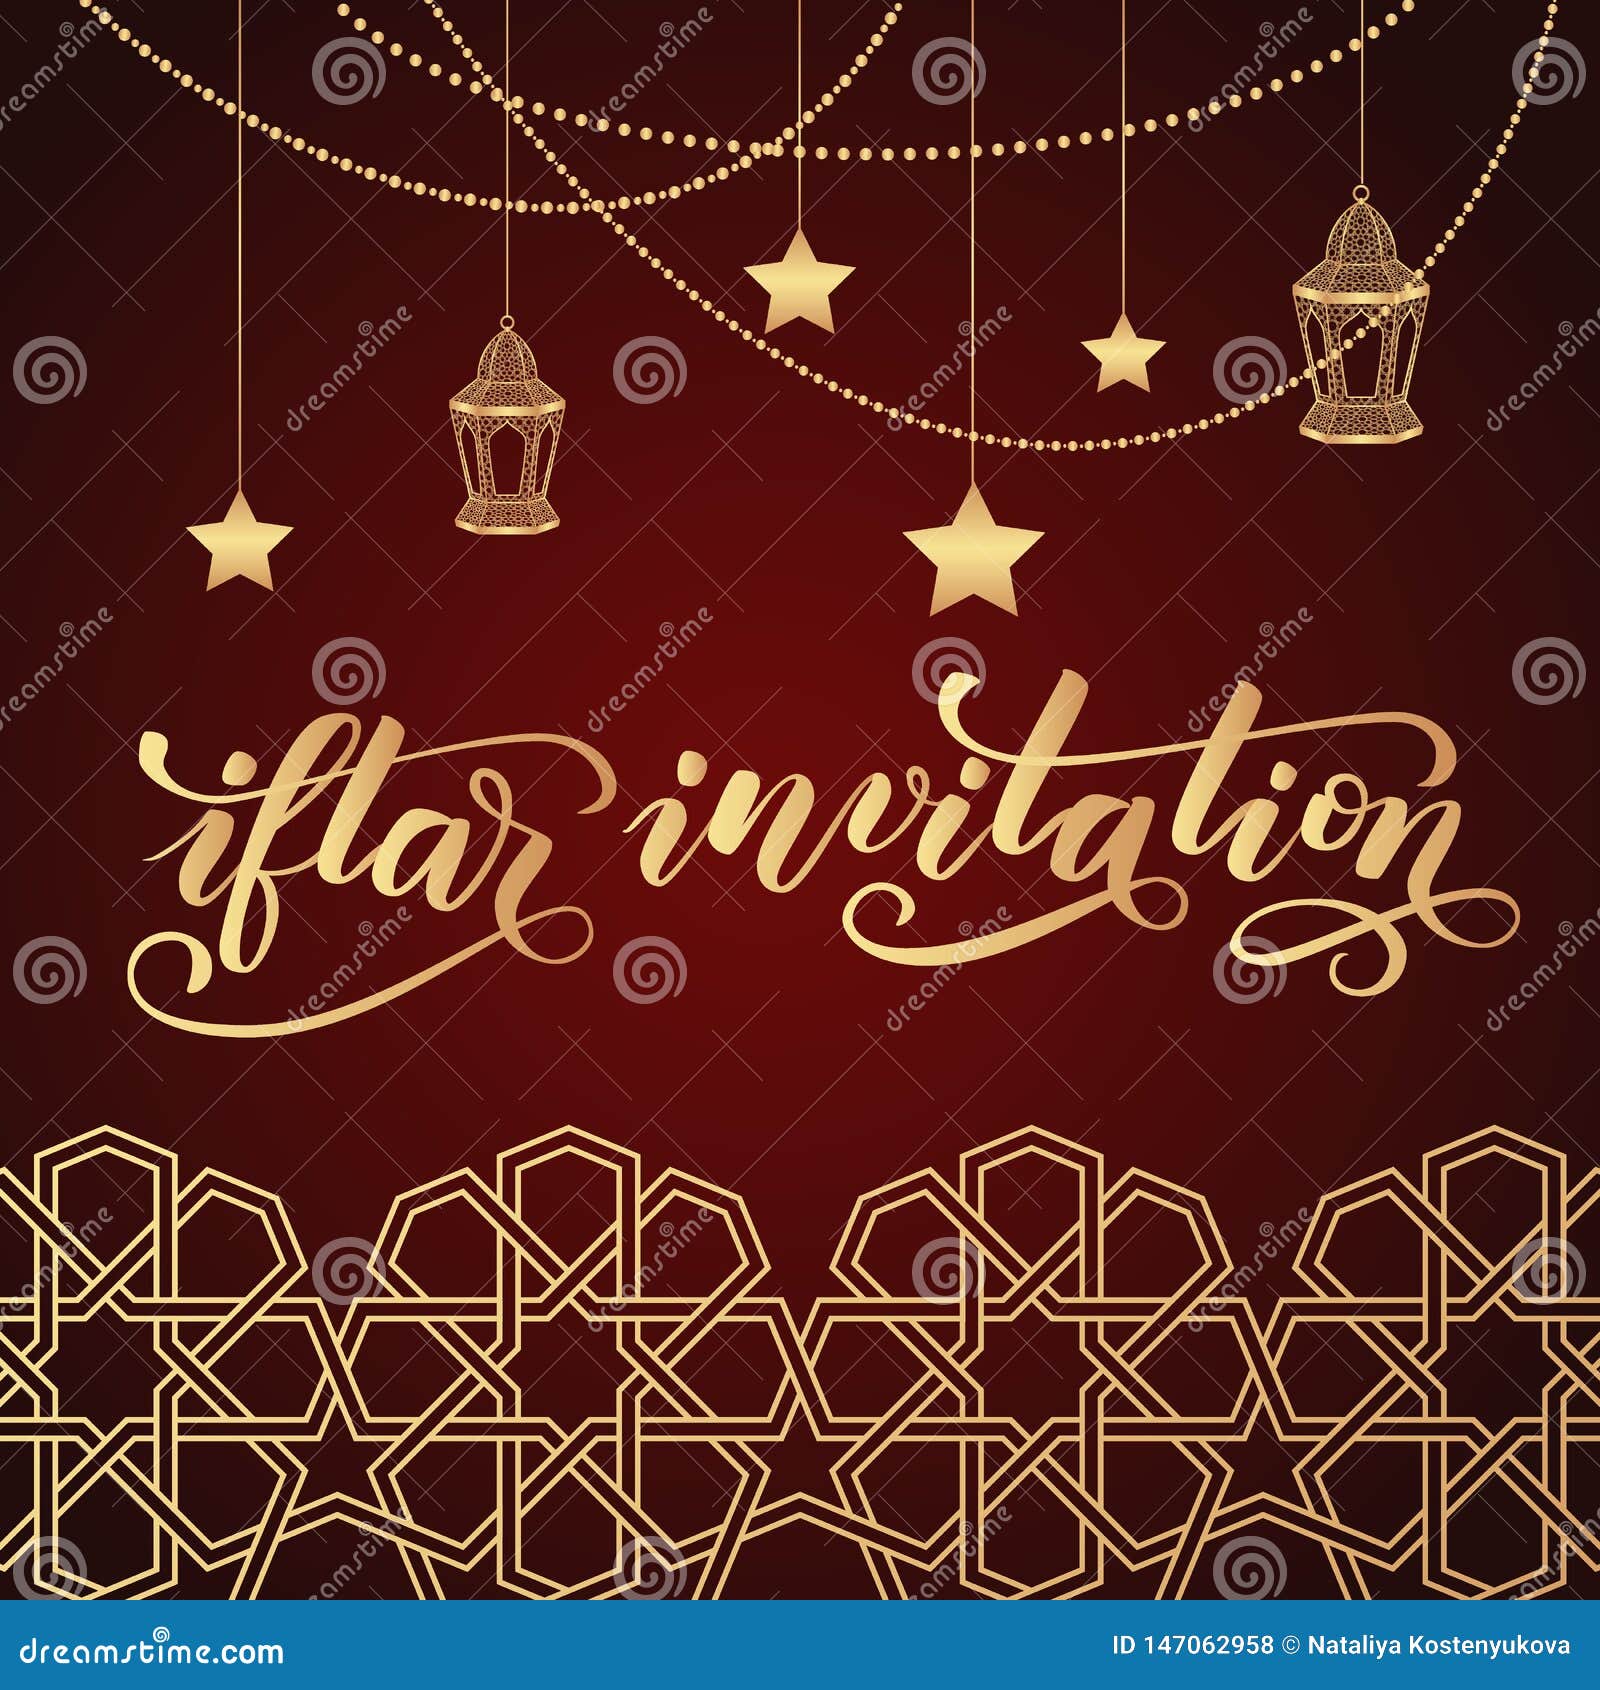 Iftar Invitation Brush Calligraphy Illustration 147062958 - Megapixl